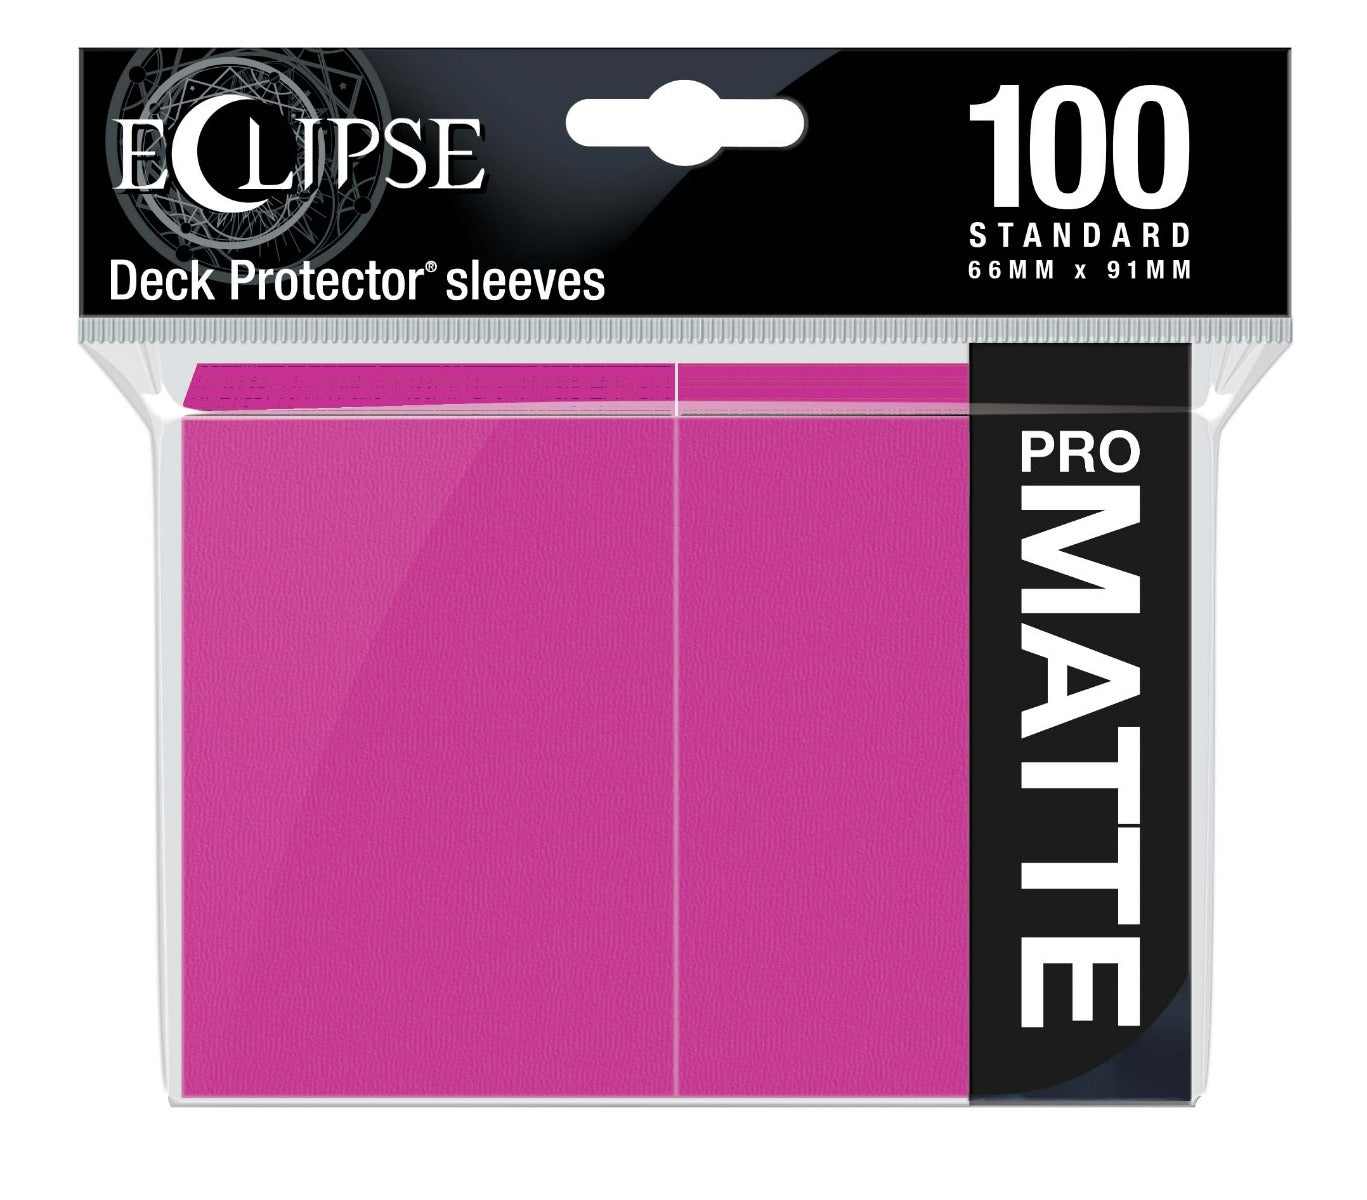 Eclipse Matte Standard Sleeves 100 pack Hot Pink